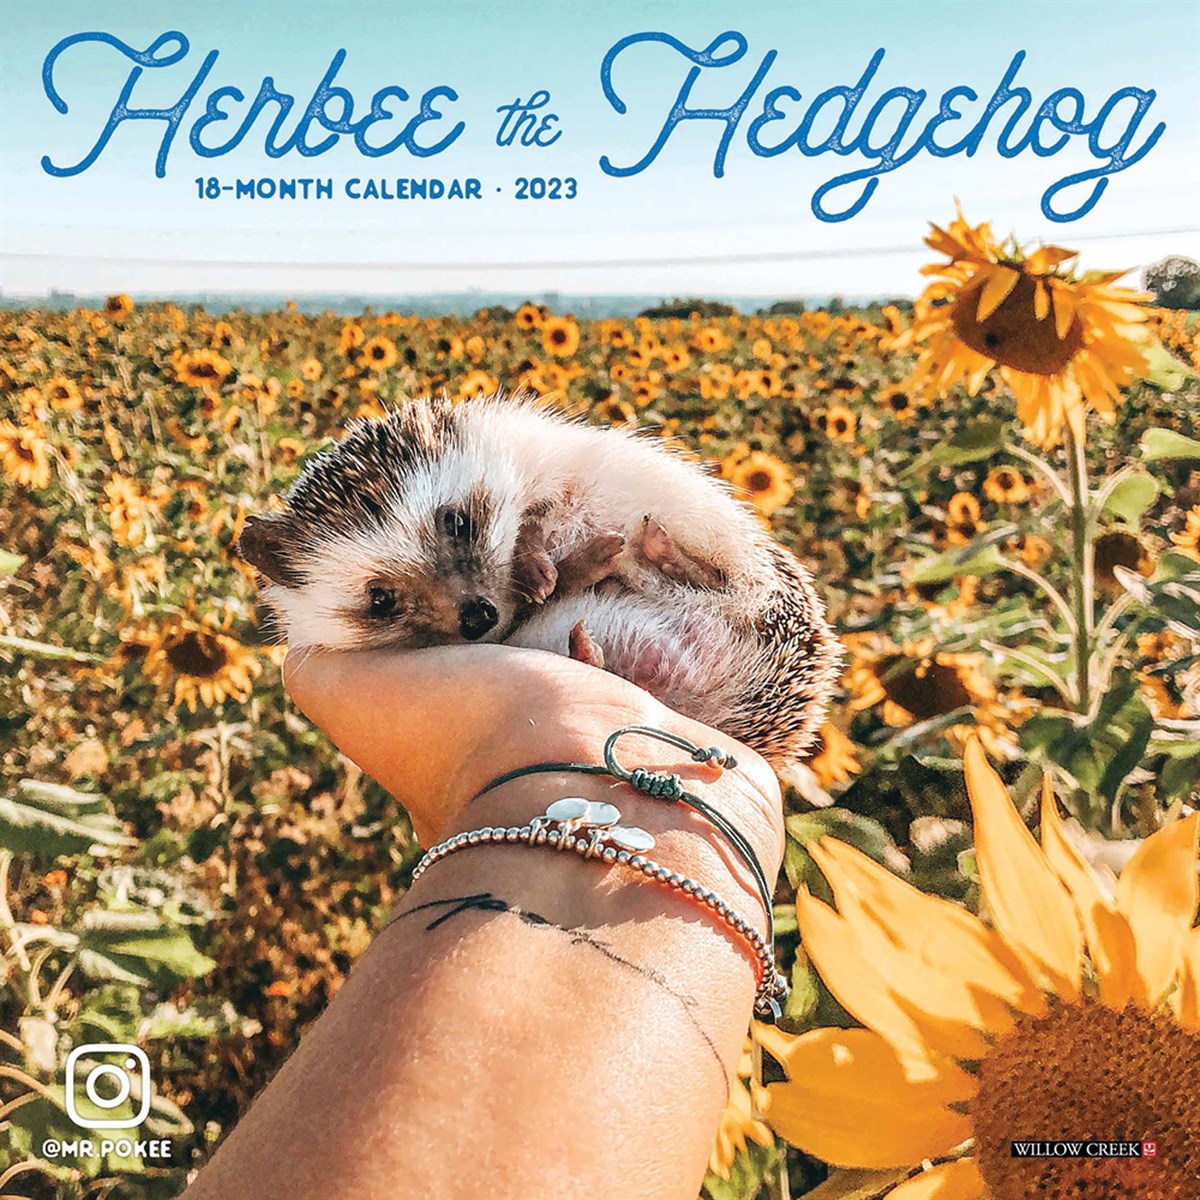 Herbee The Hedgehog Mini 2023 Calendars